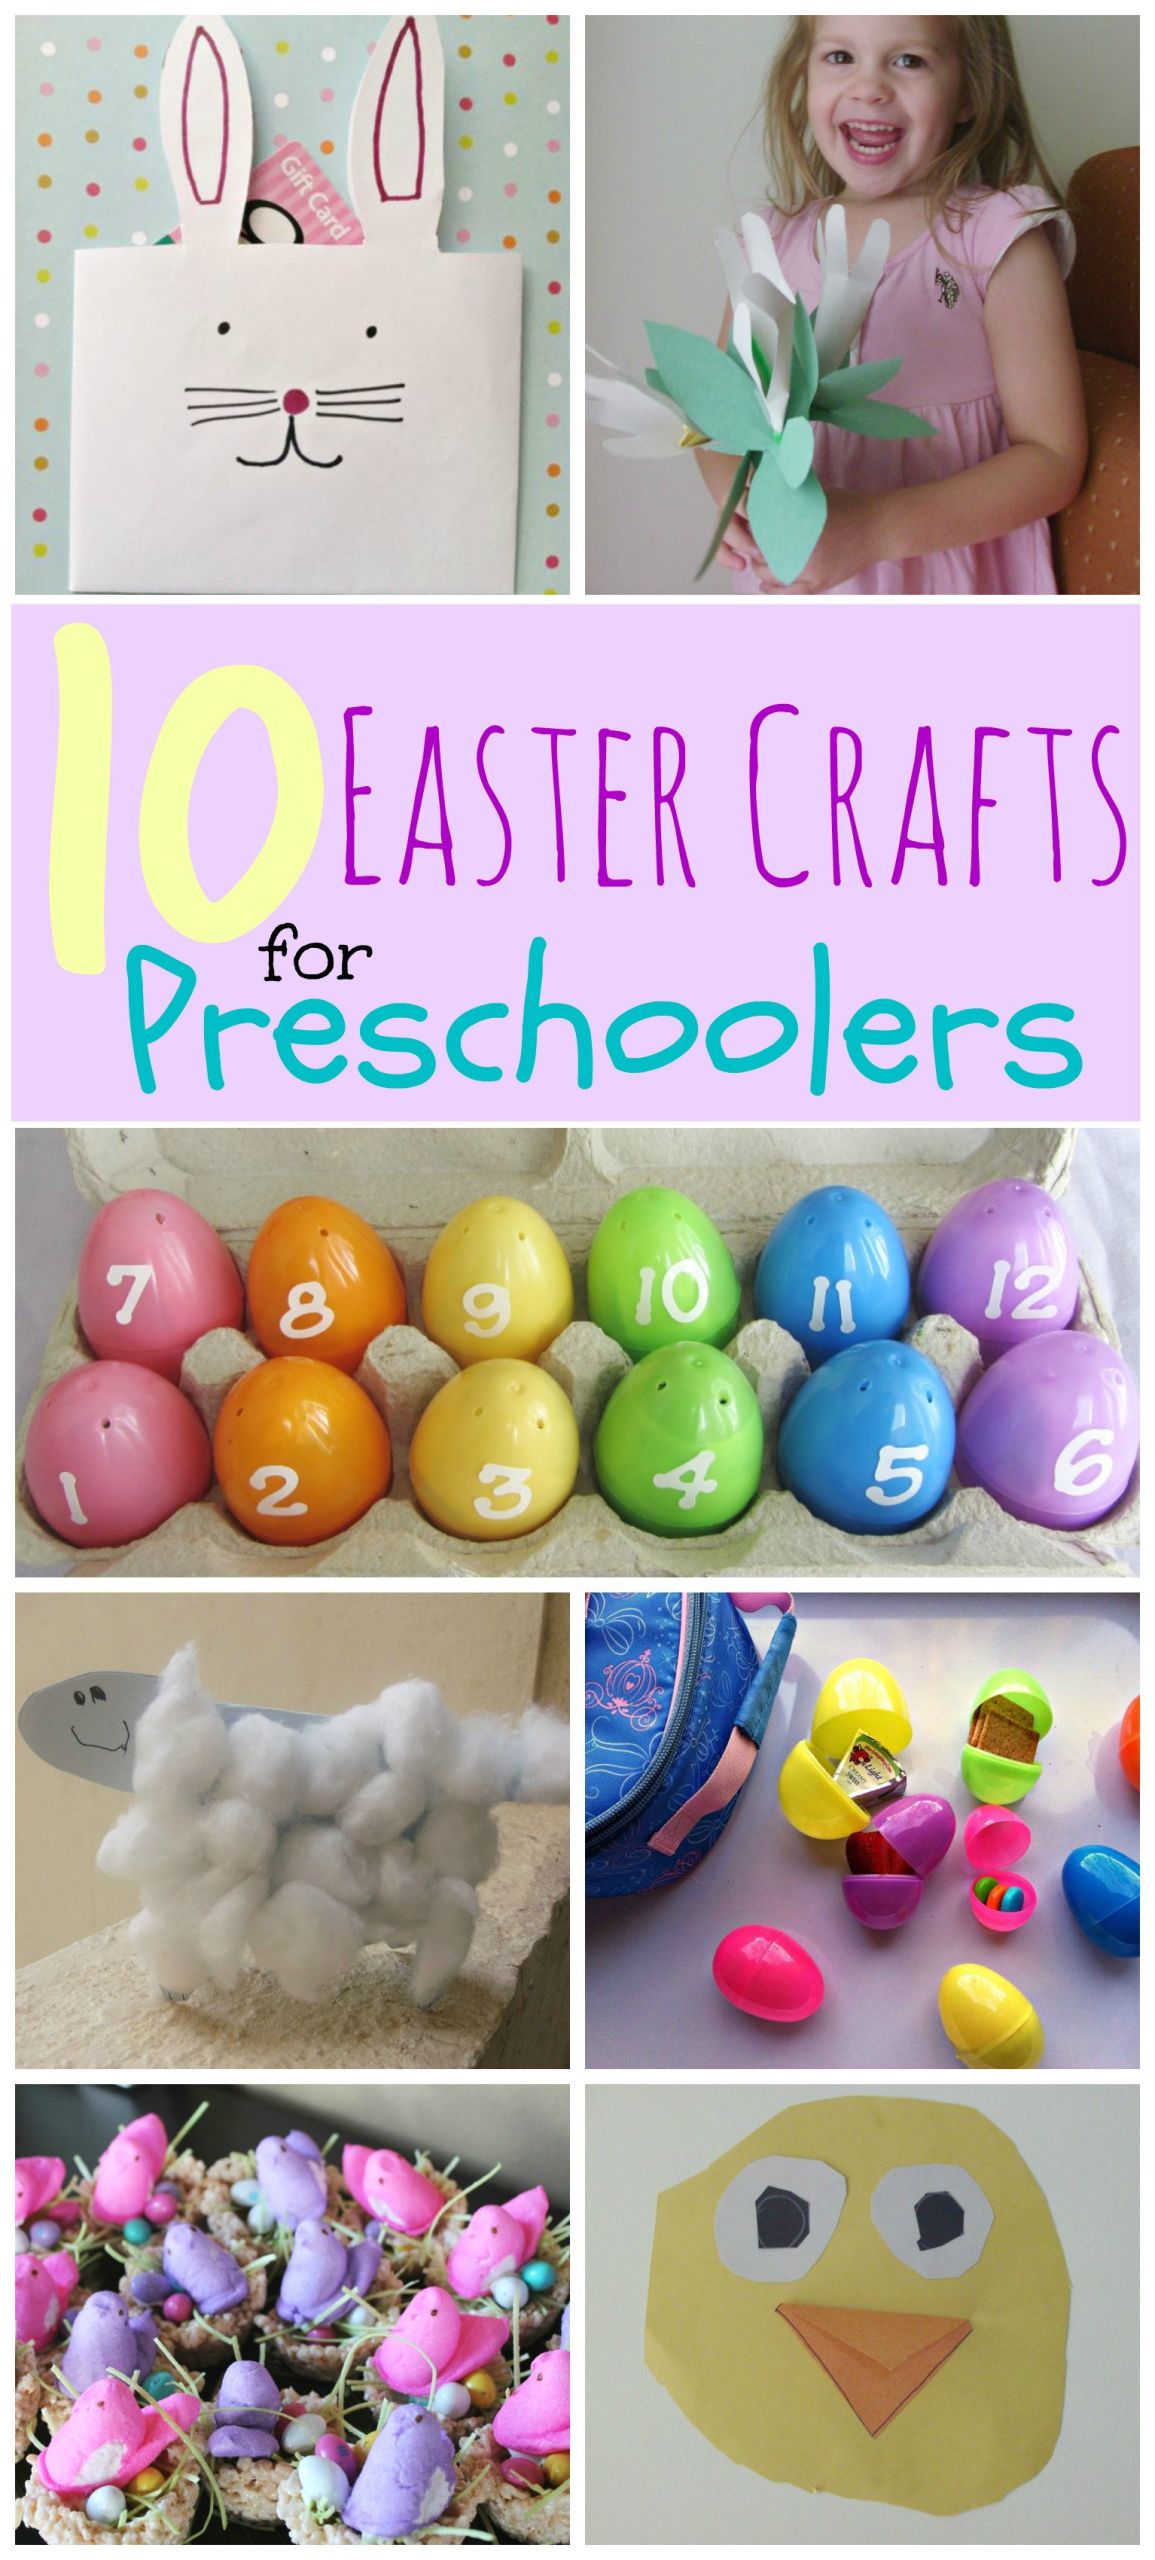 Easter Ideas For Preschoolers
 10 Easter Crafts for Preschoolers